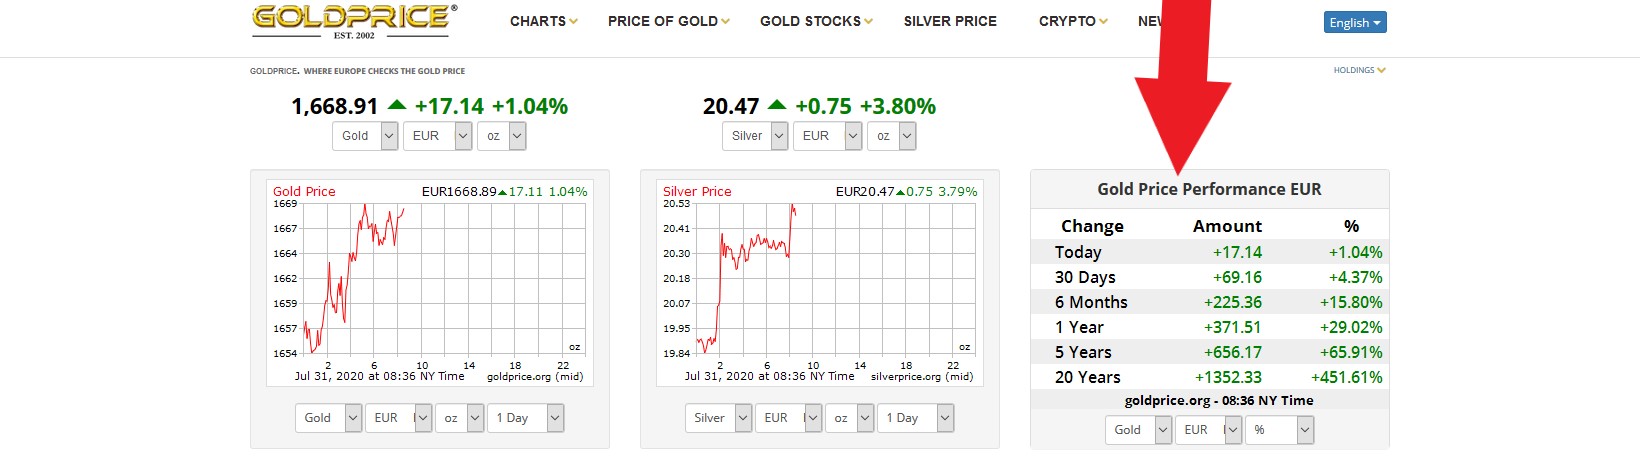 gold-price-last-20years.jpg